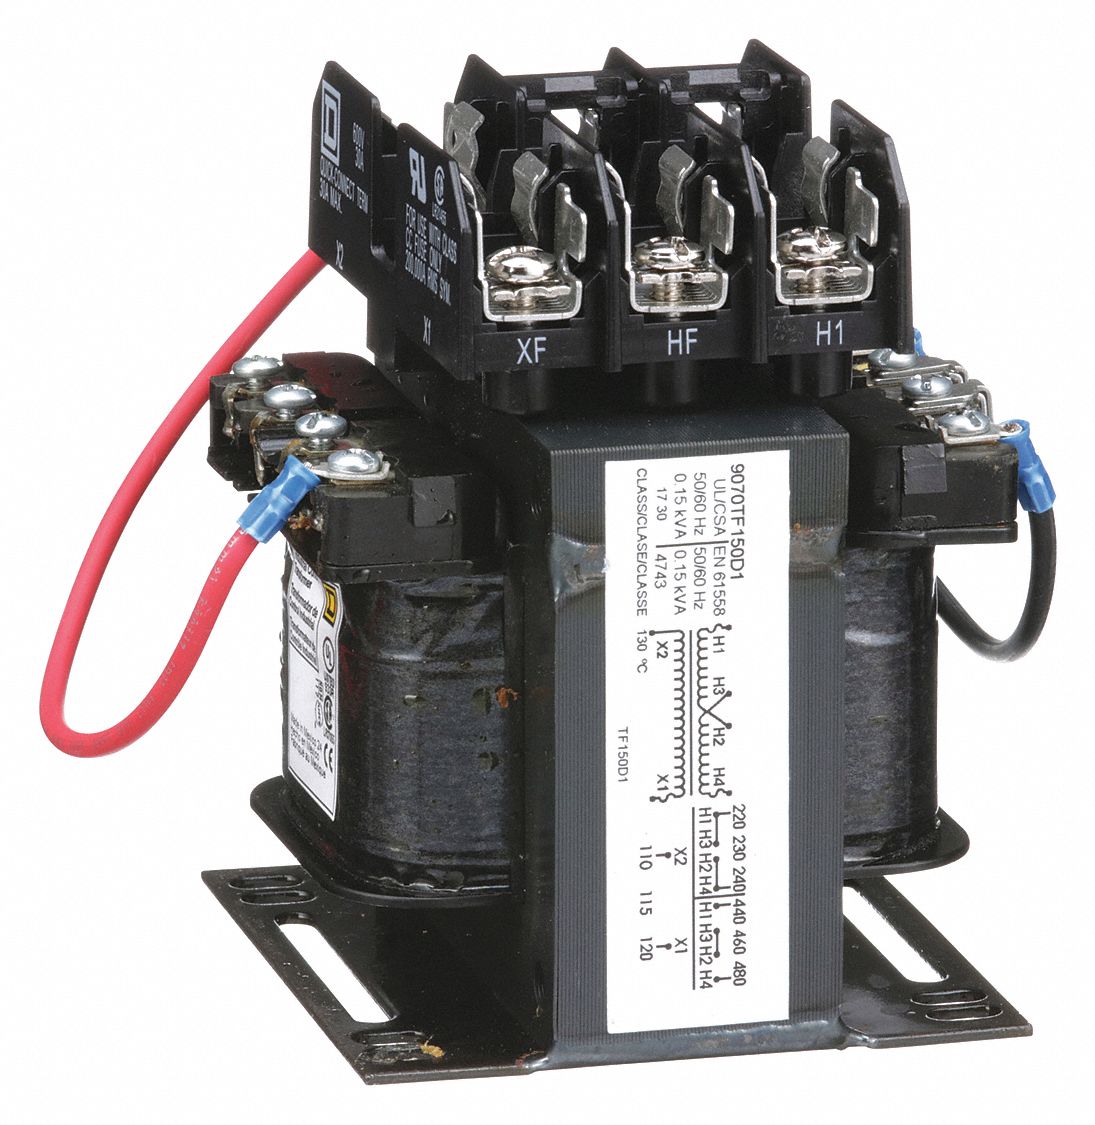 Square D Industrial Control Transformer 9070T150D5 for sale online 